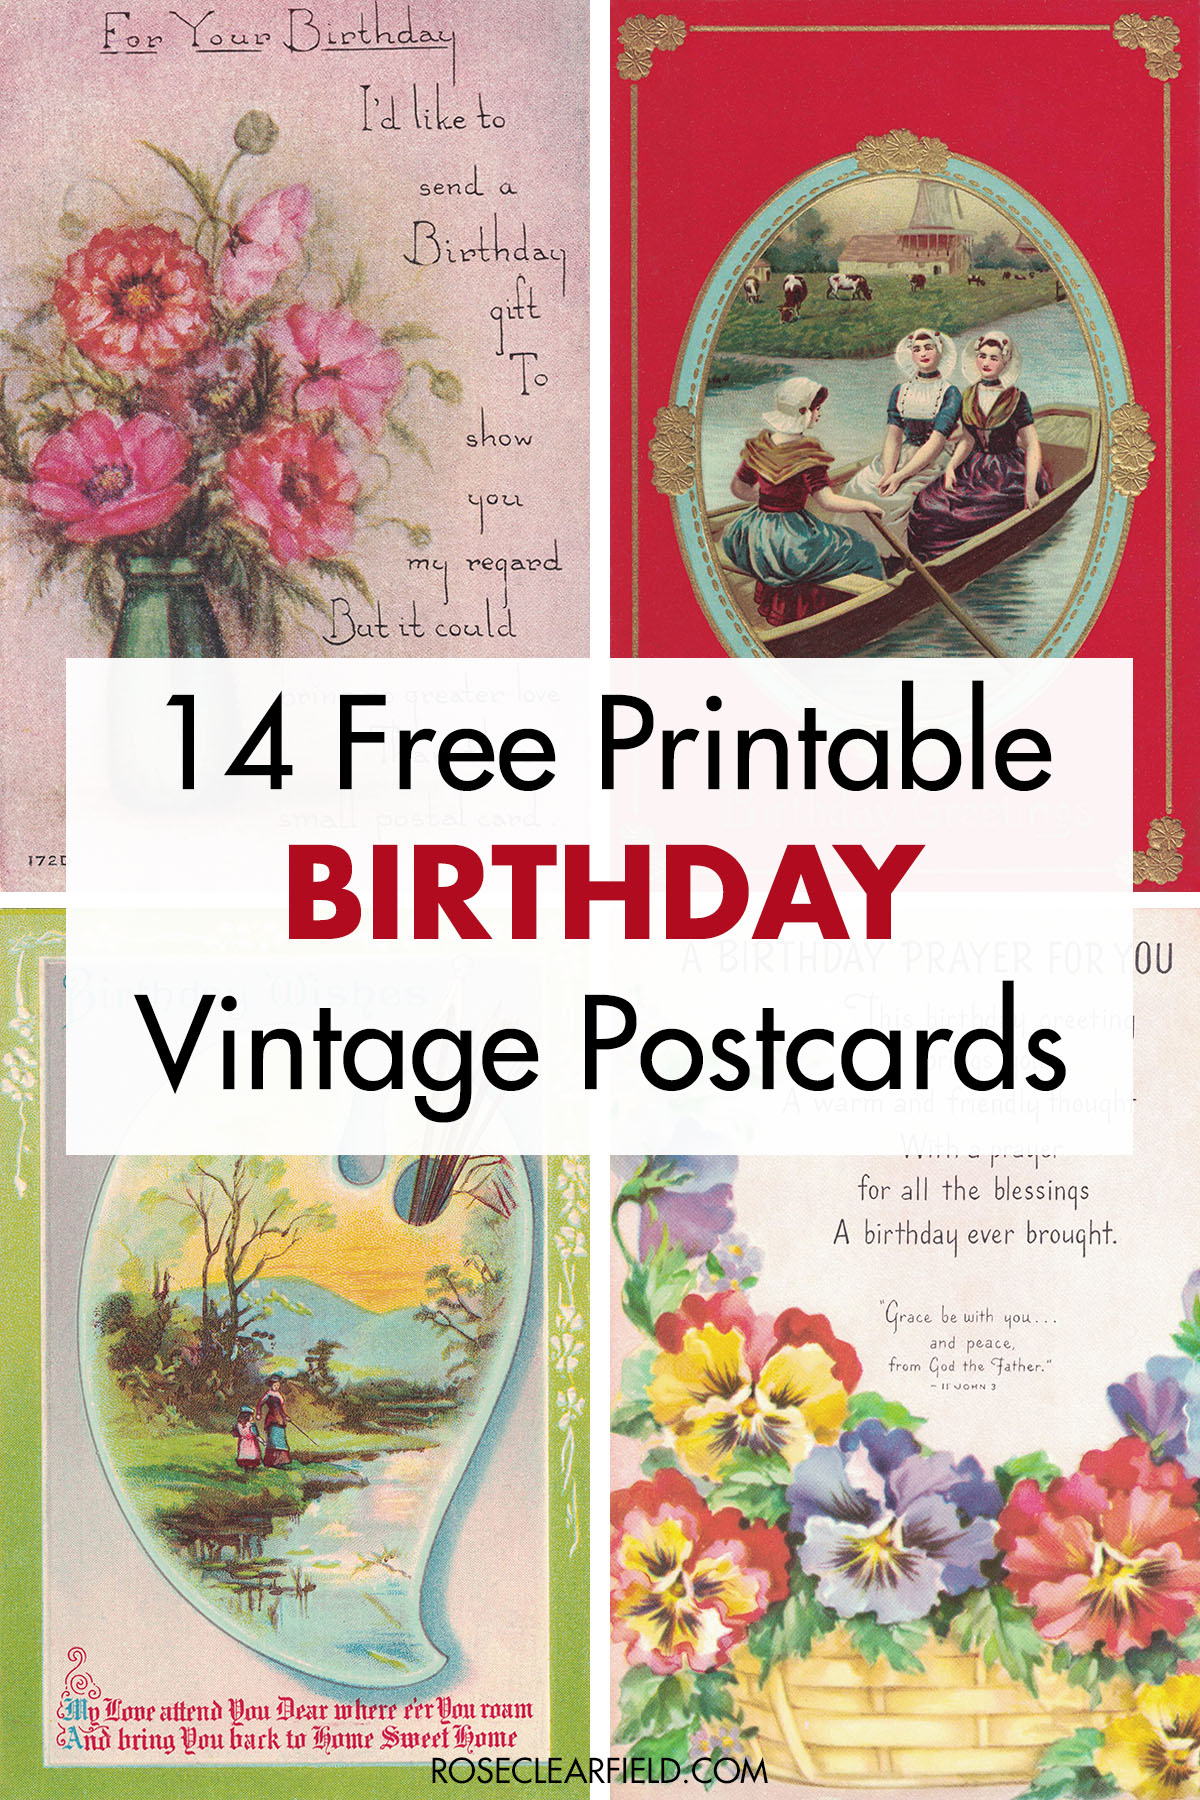 14-free-printable-birthday-vintage-postcards-rose-clearfield